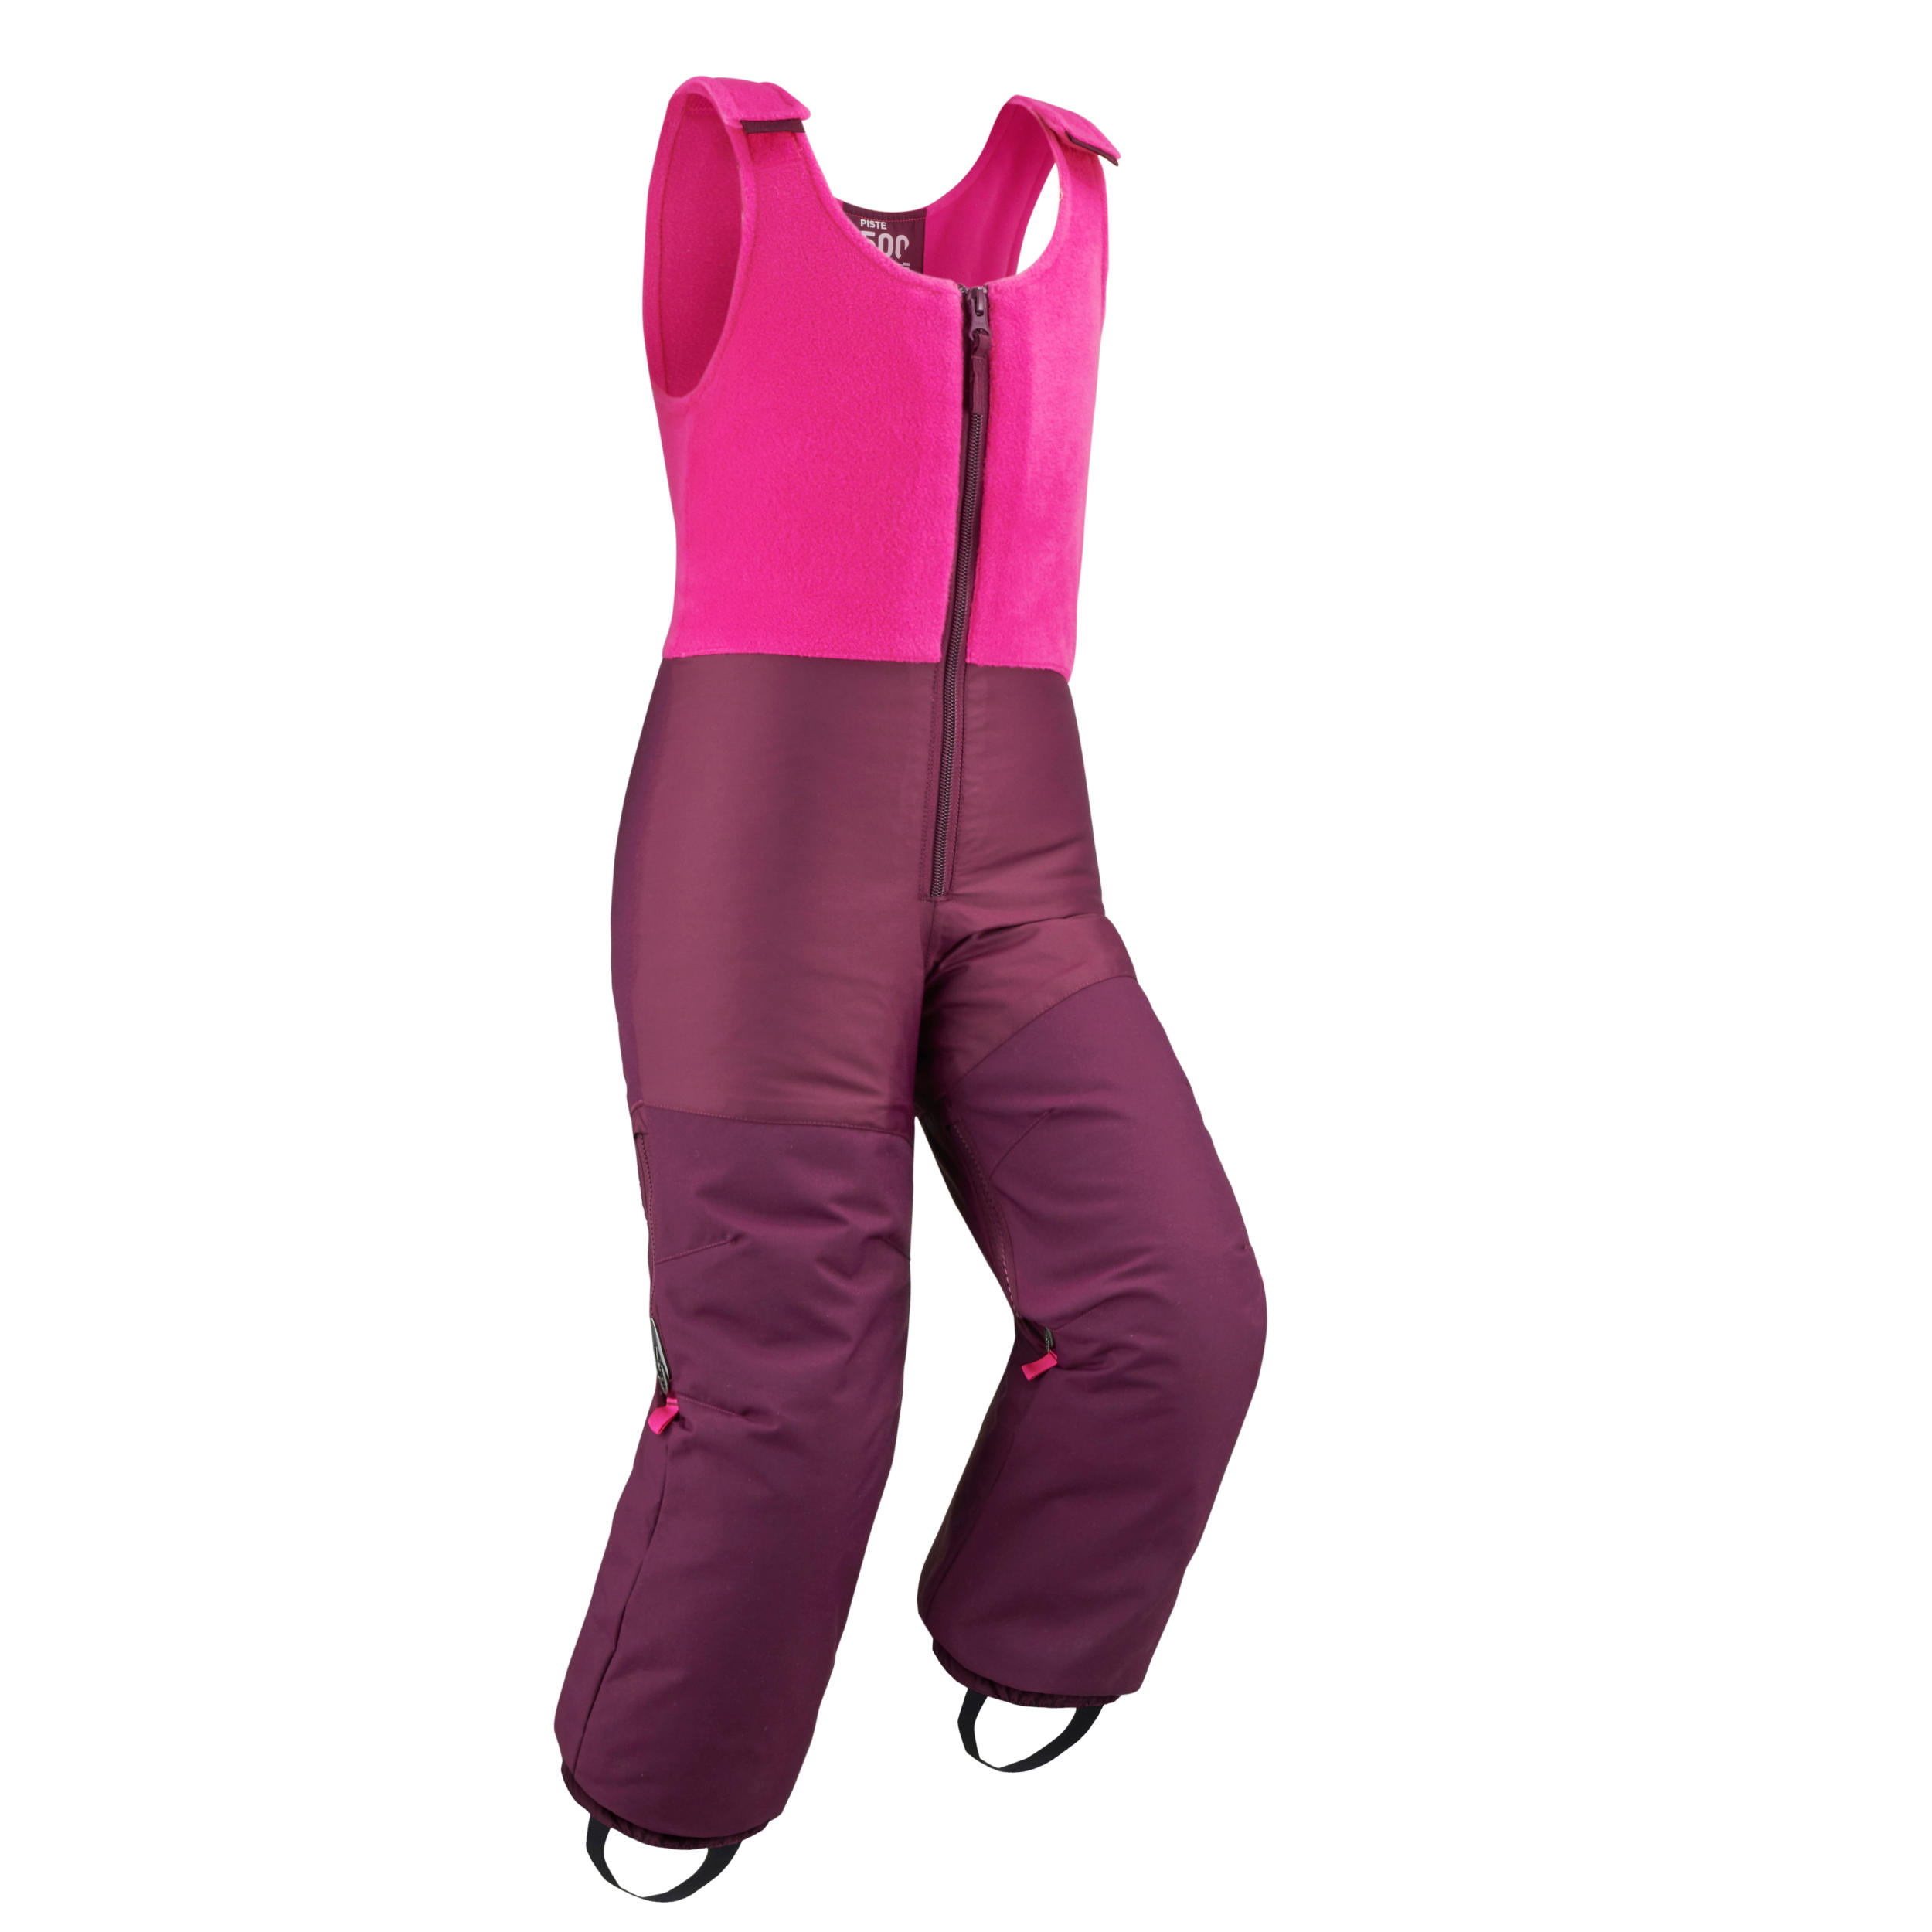 WEDZE Children's Skiing Salopettes - Pink and Plum